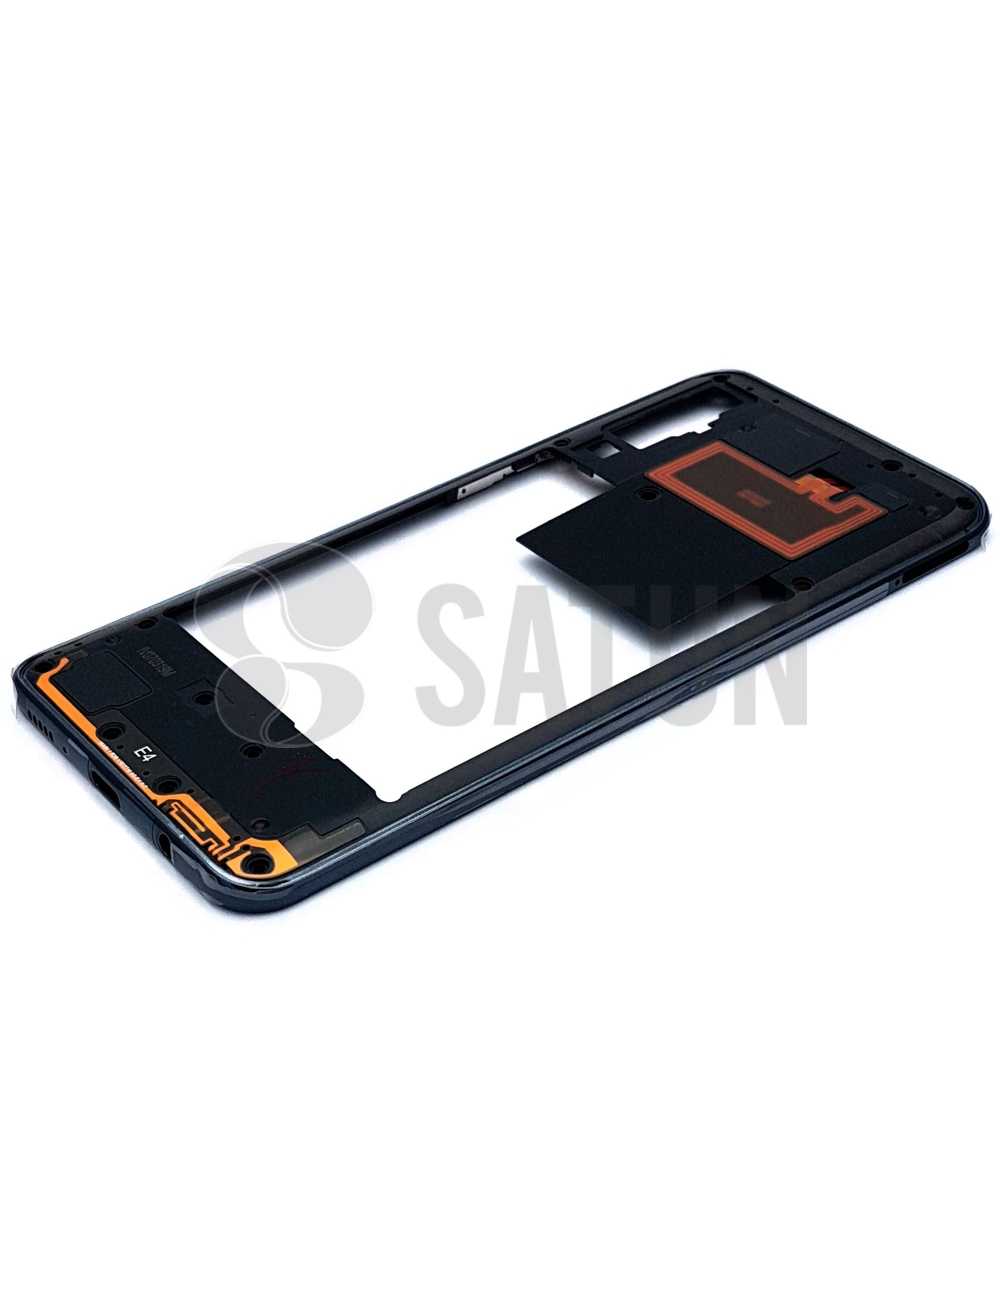 Carcasa intermedia Samsung Galaxy A50 negro